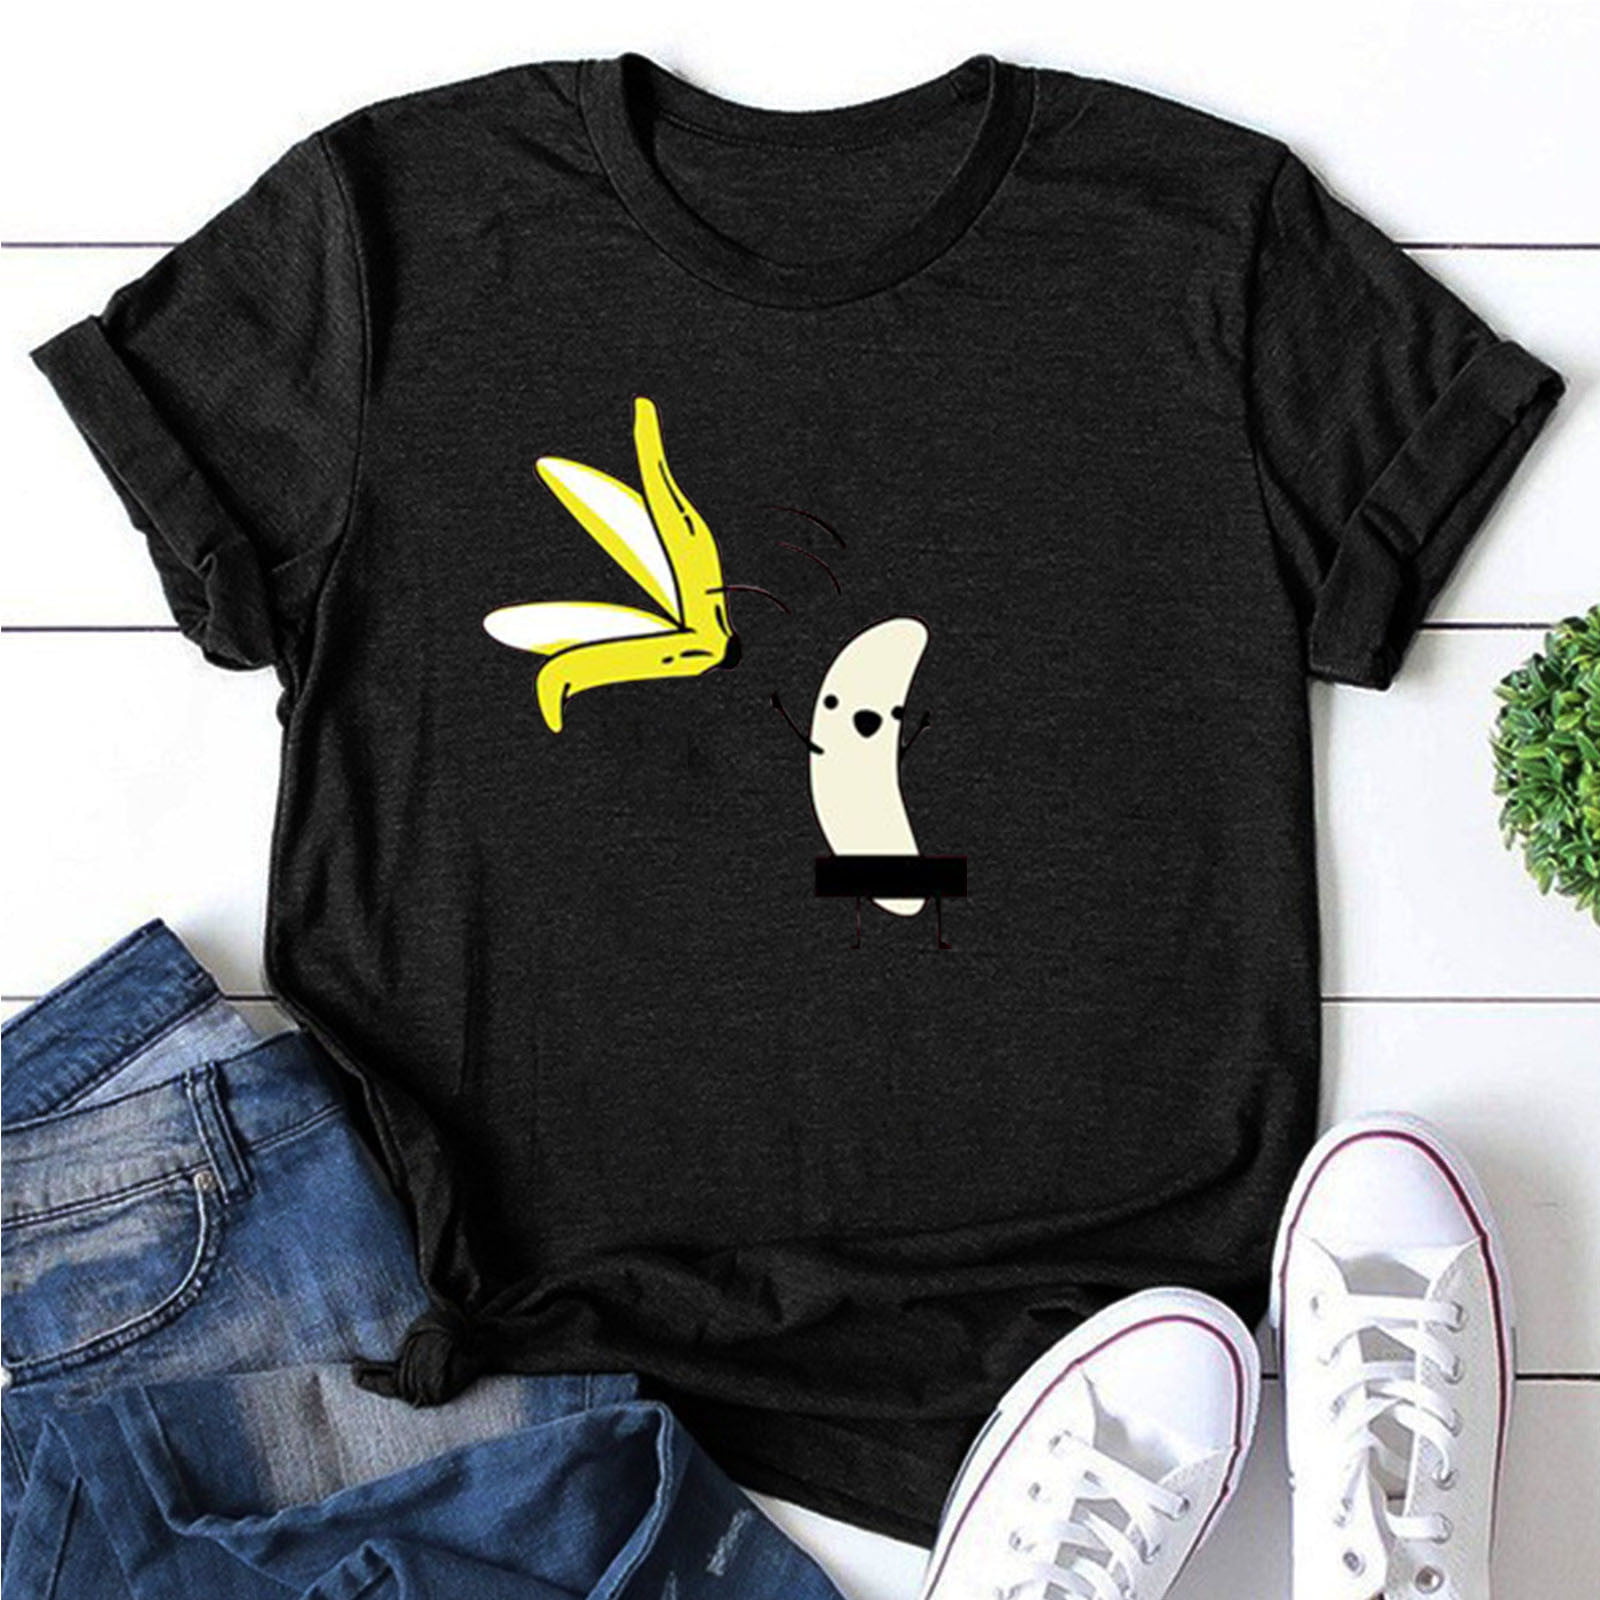 Shpwfbe Casual O-Neck Cute Fruit Print Short Sleeve T-Shirt Blouse Womens  Tops 